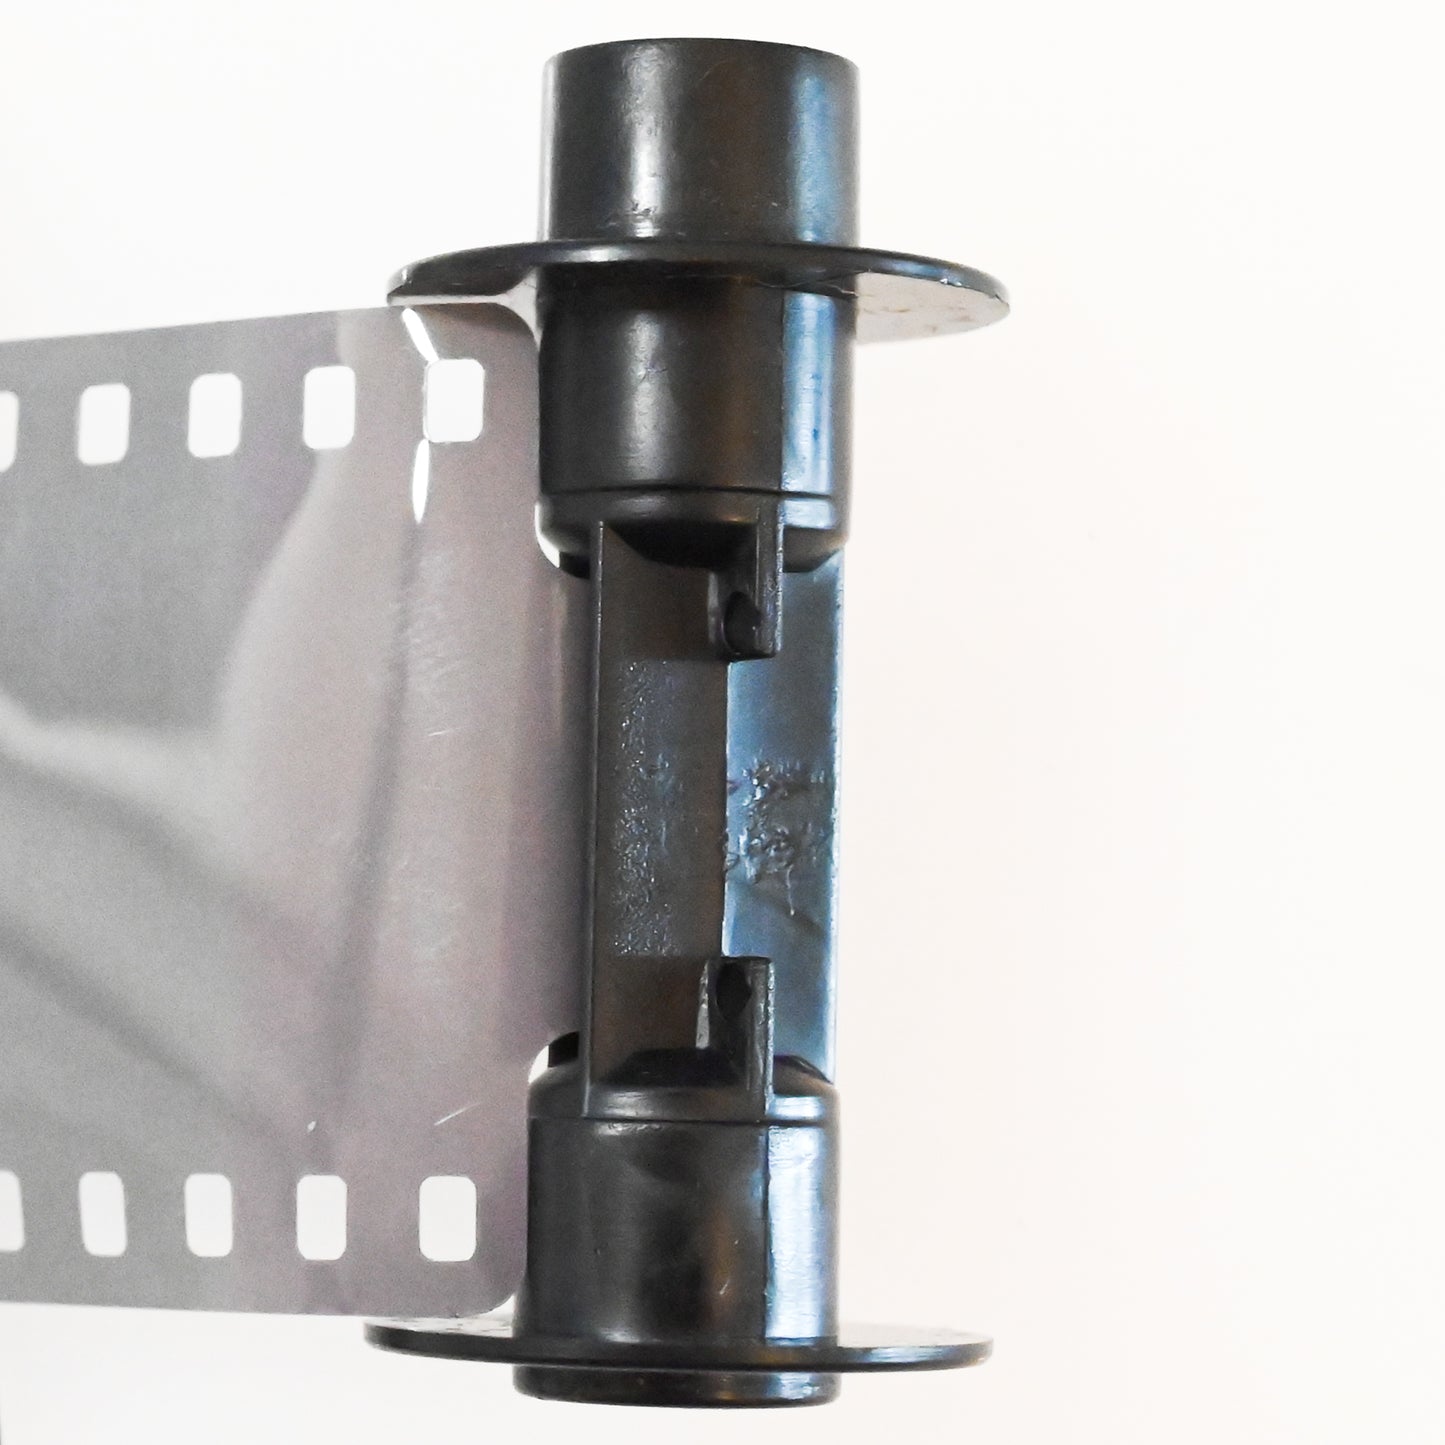 Marix black and white negative film ISO400 36 sheets MARIX BLACK &amp; WHITE FILM